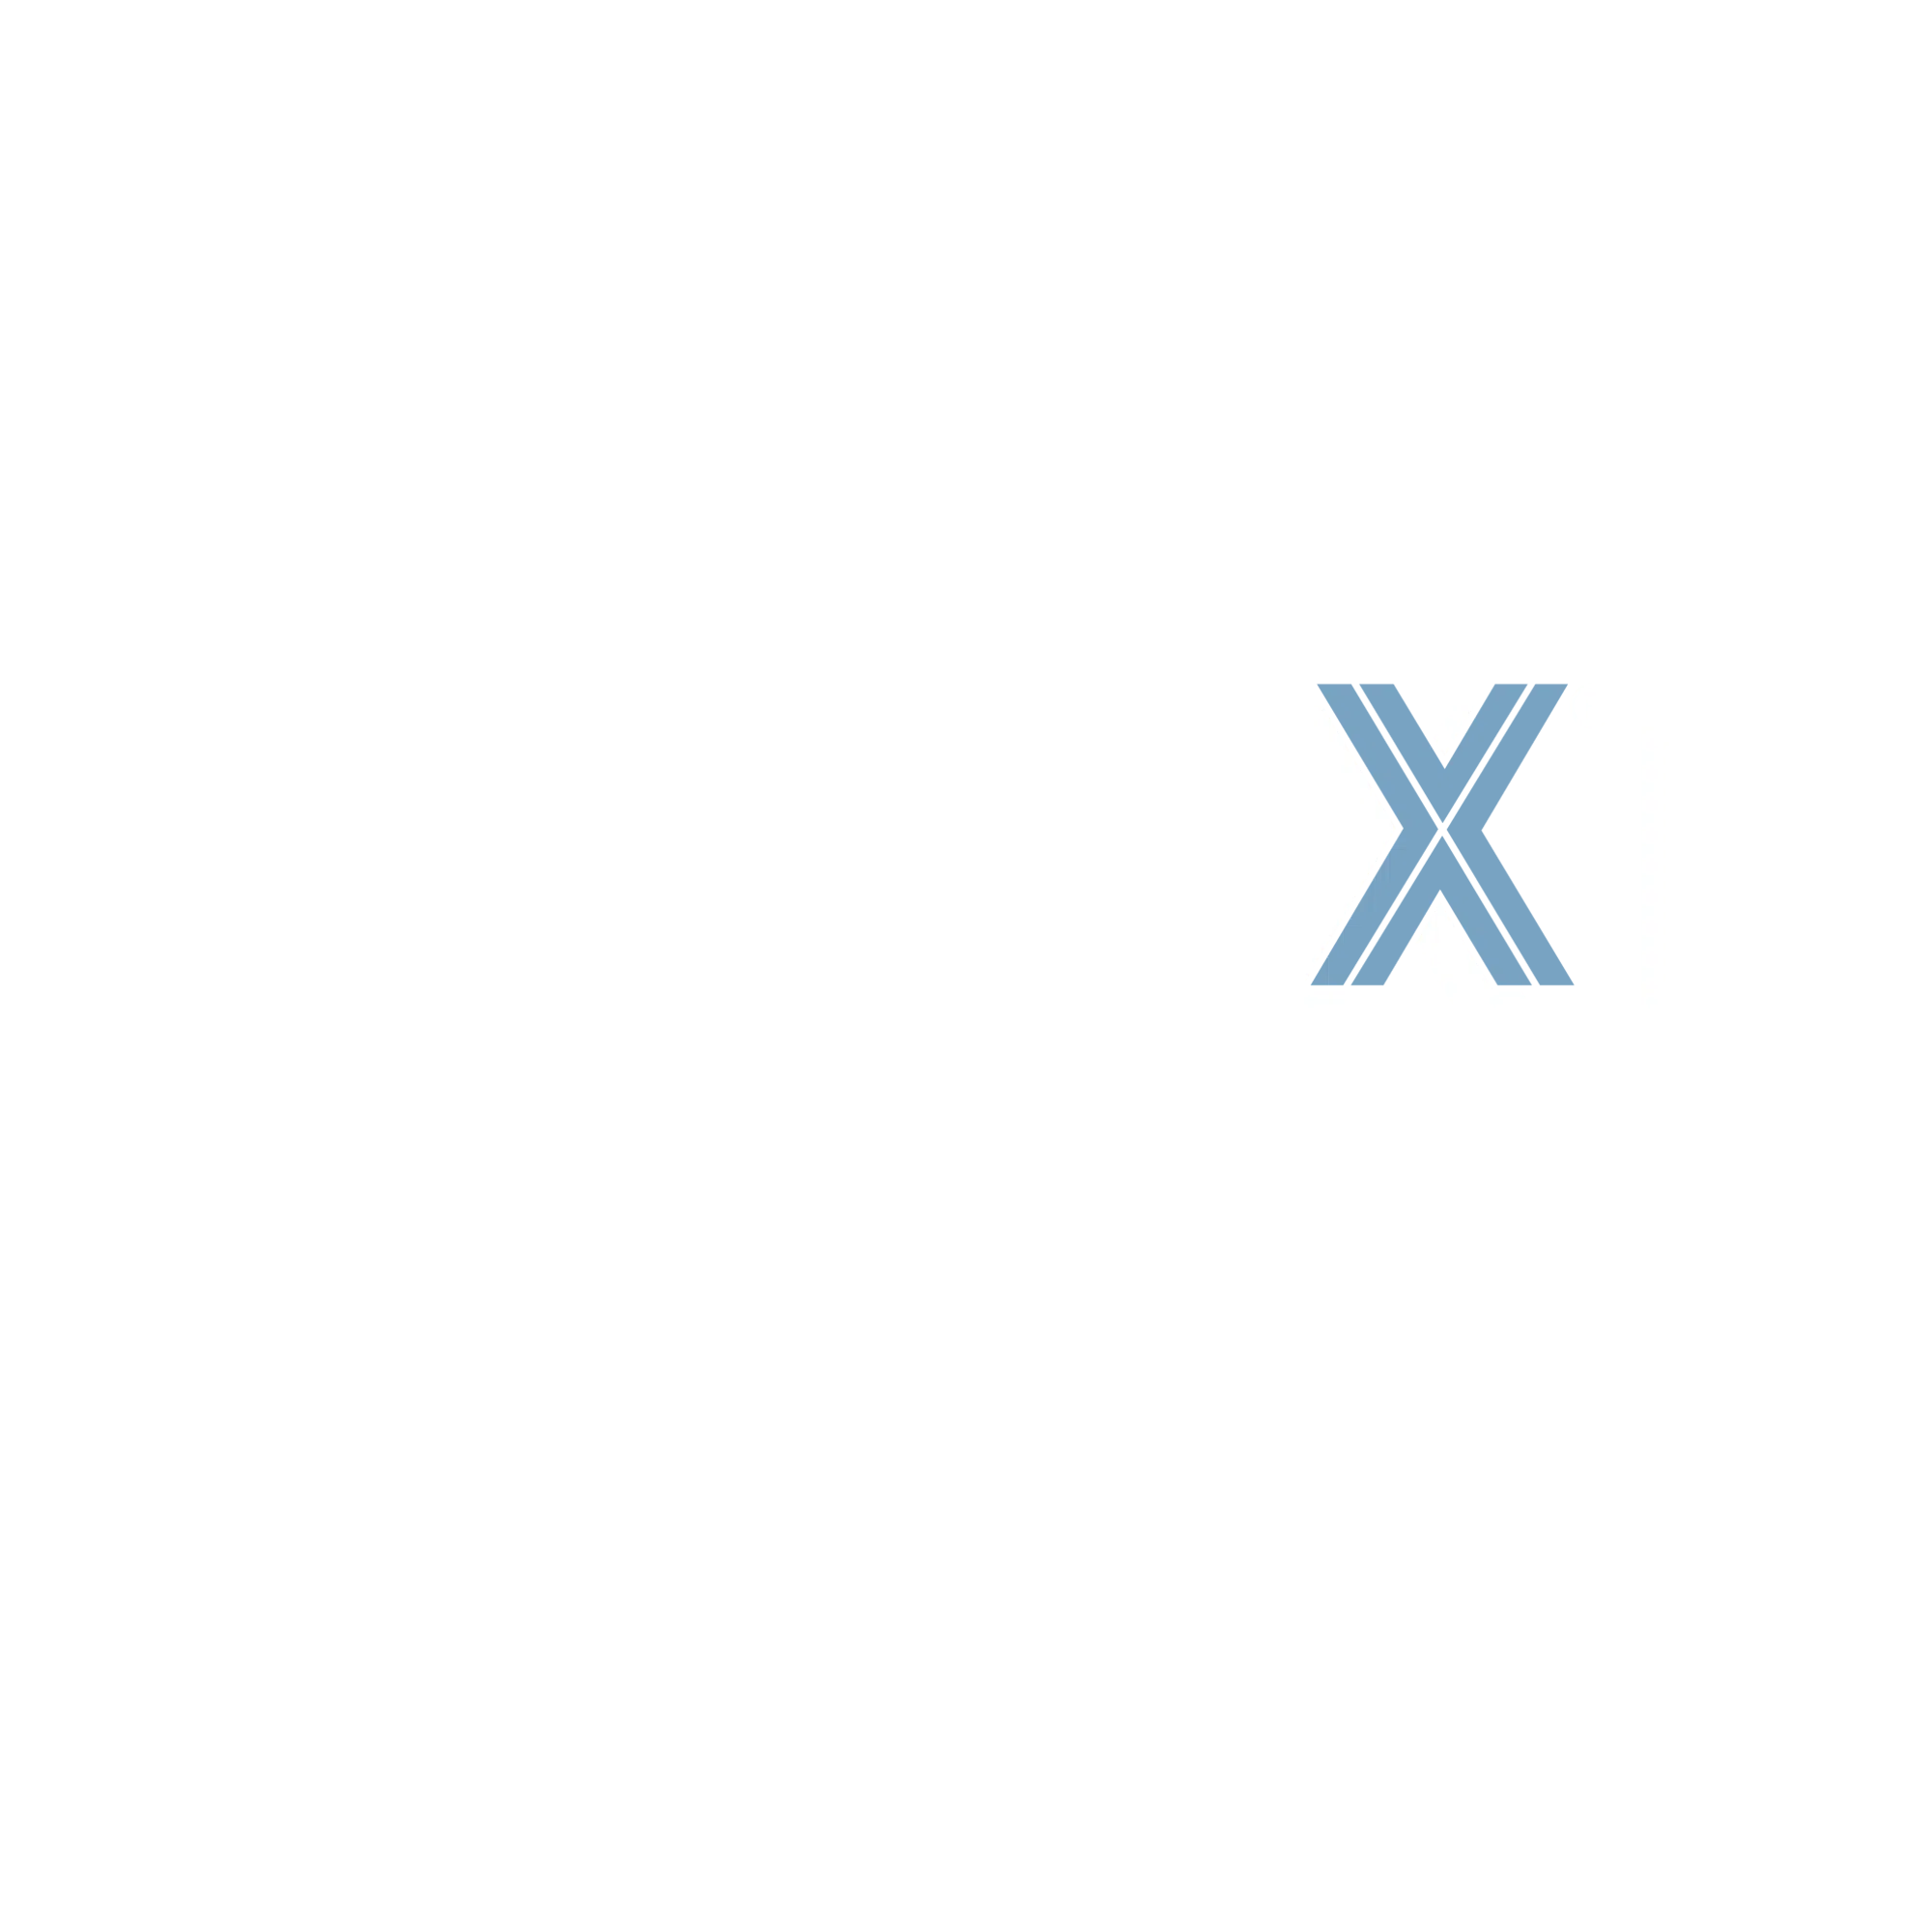 CMOx Active Member